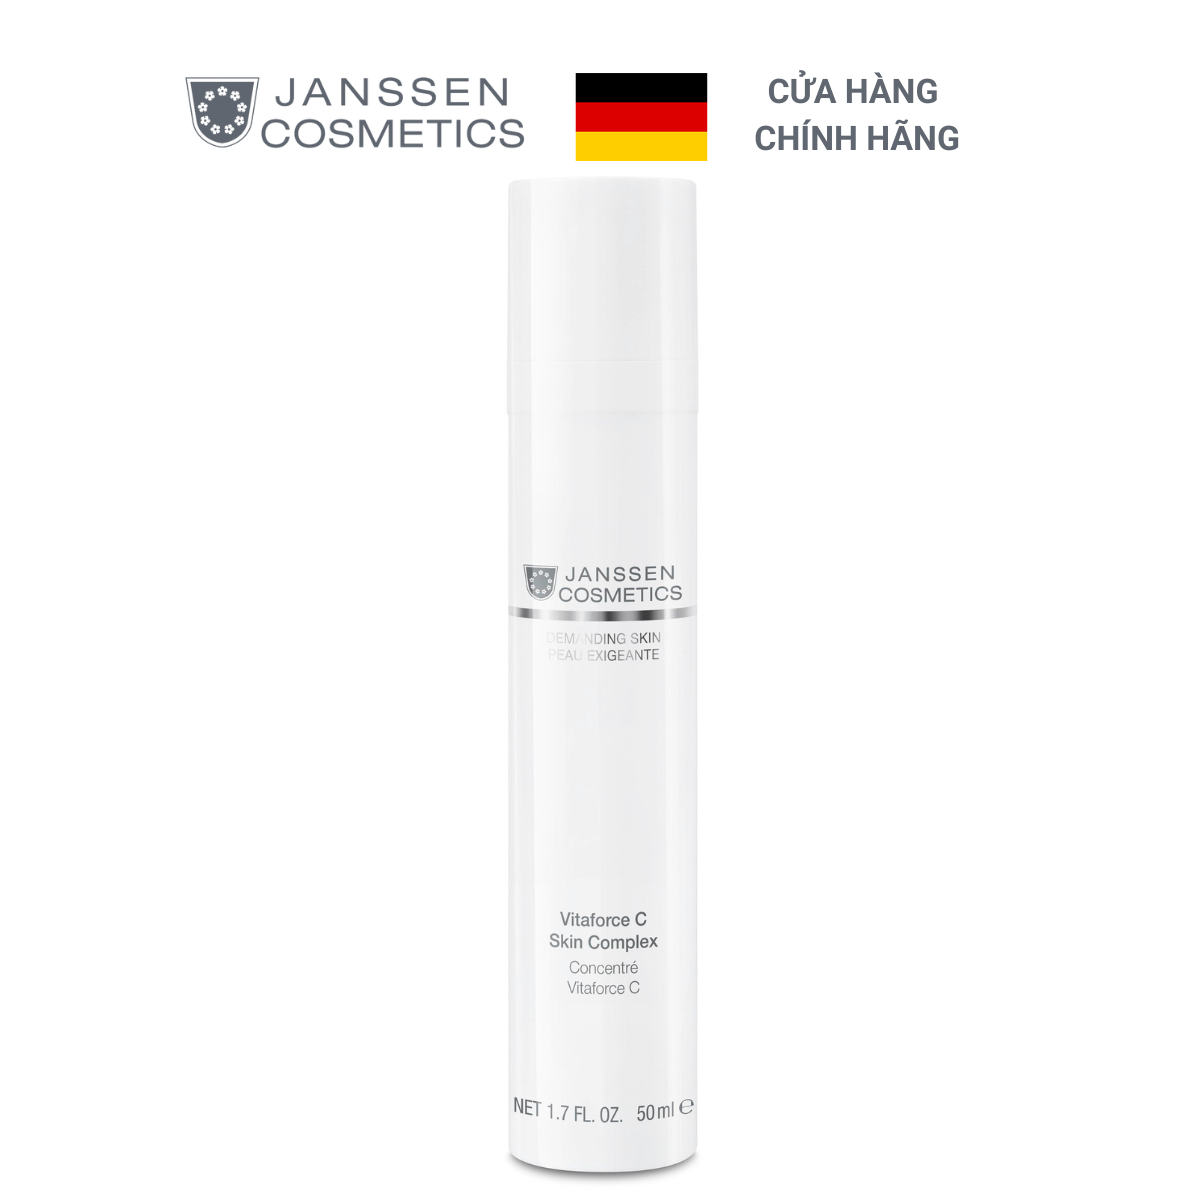  Serum dưỡng trắng, chống lão hoá da Janssen Cosmetics Vitaforce C Skin Complex 50ml 